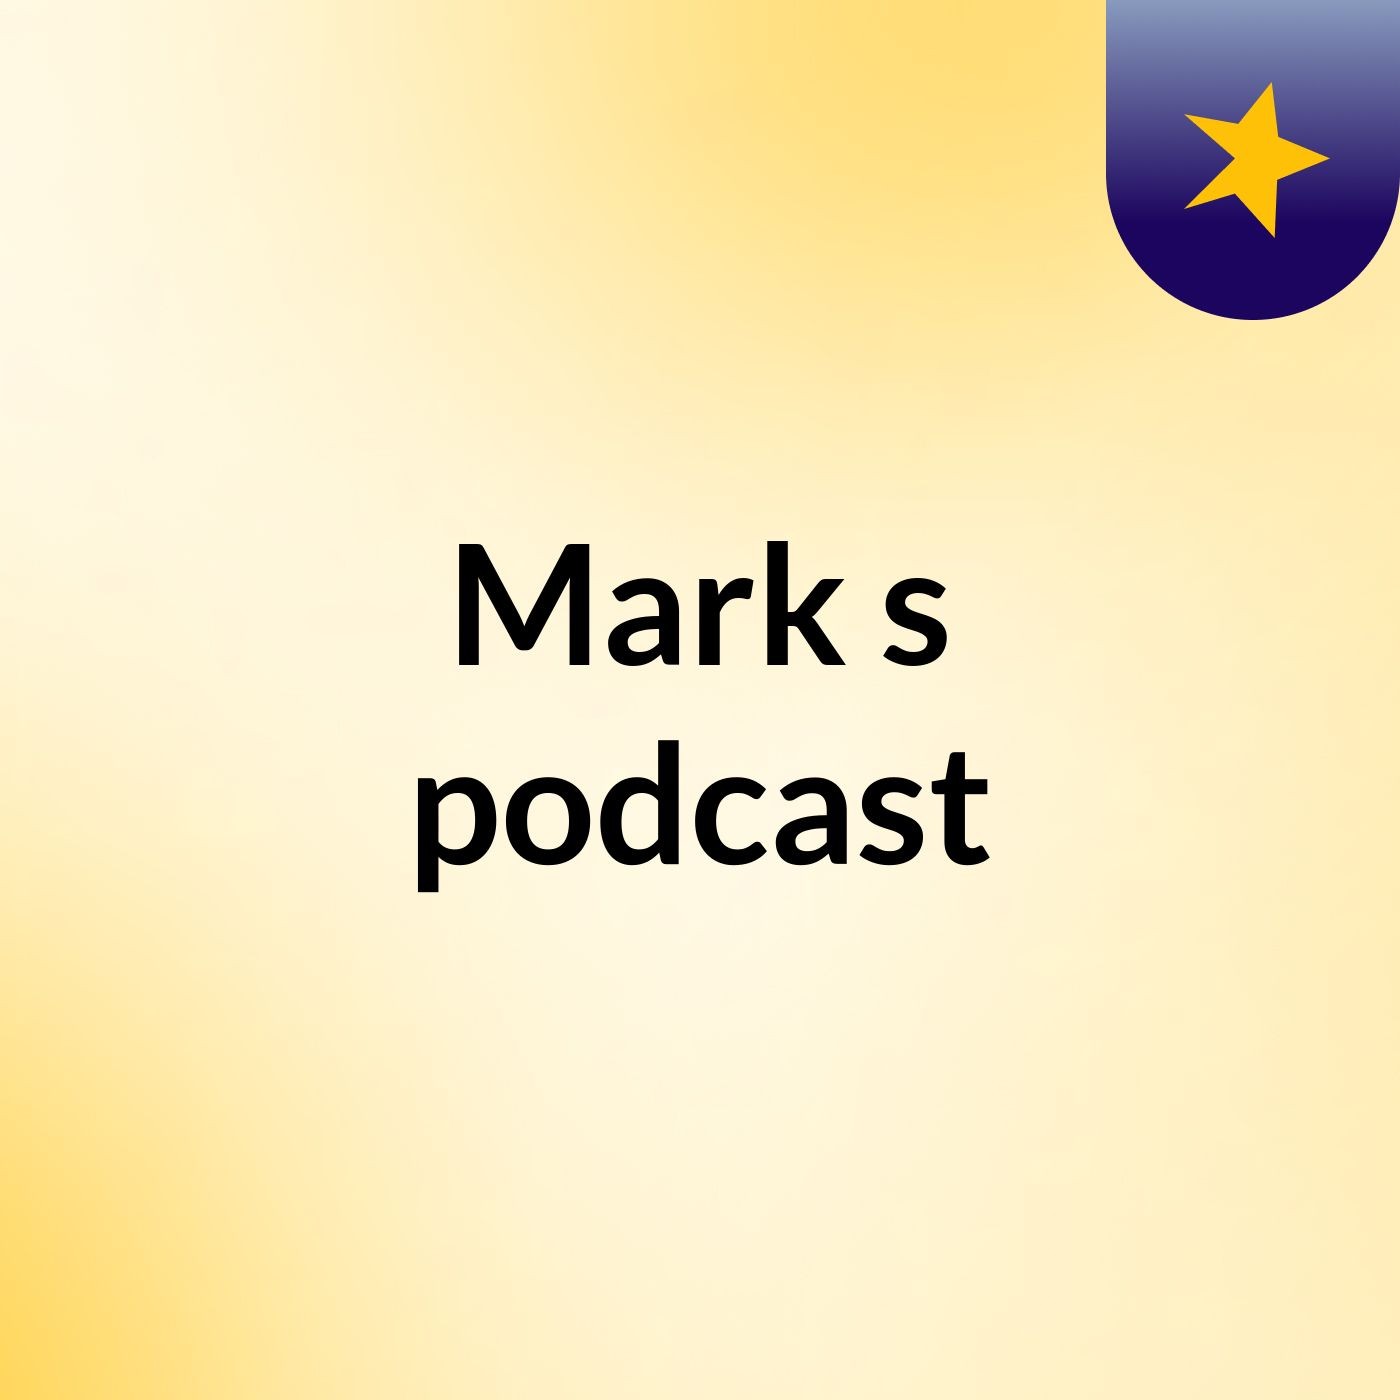 Episode 8 - Mark's podcast